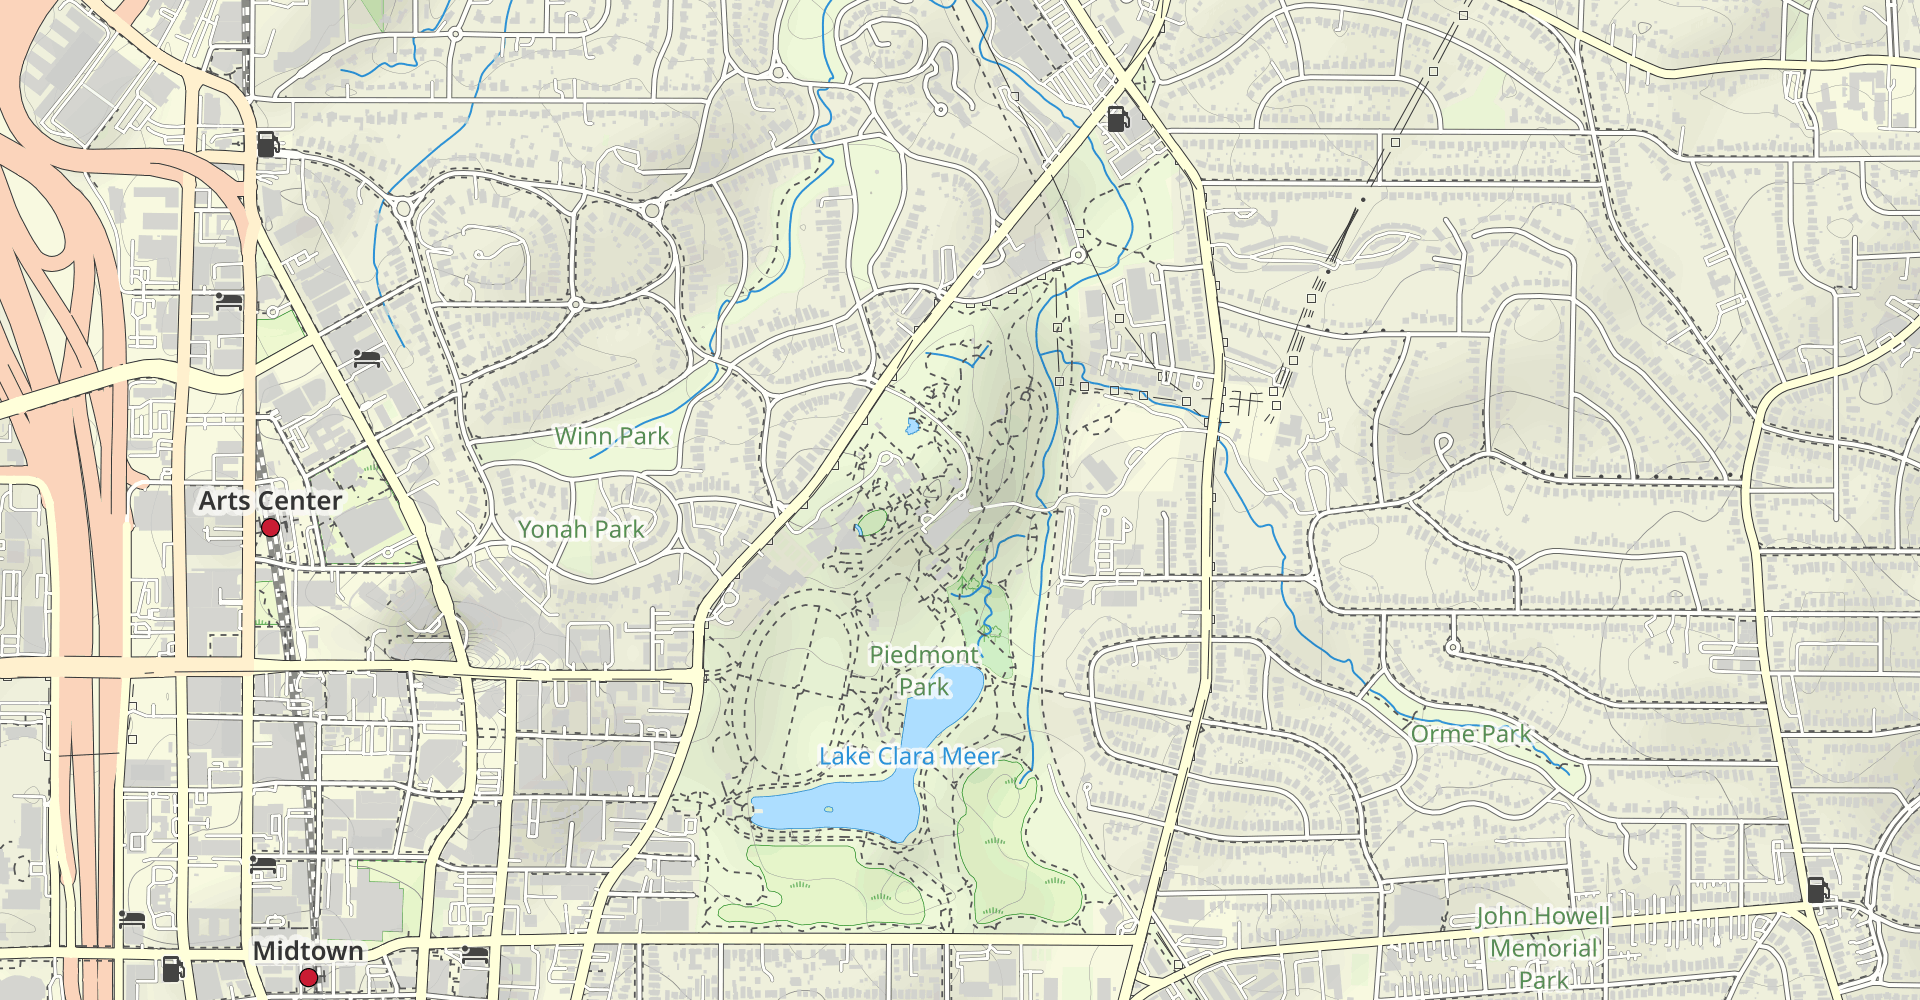 Atlanta Botanical Garden and Storza Woods Loop Trail